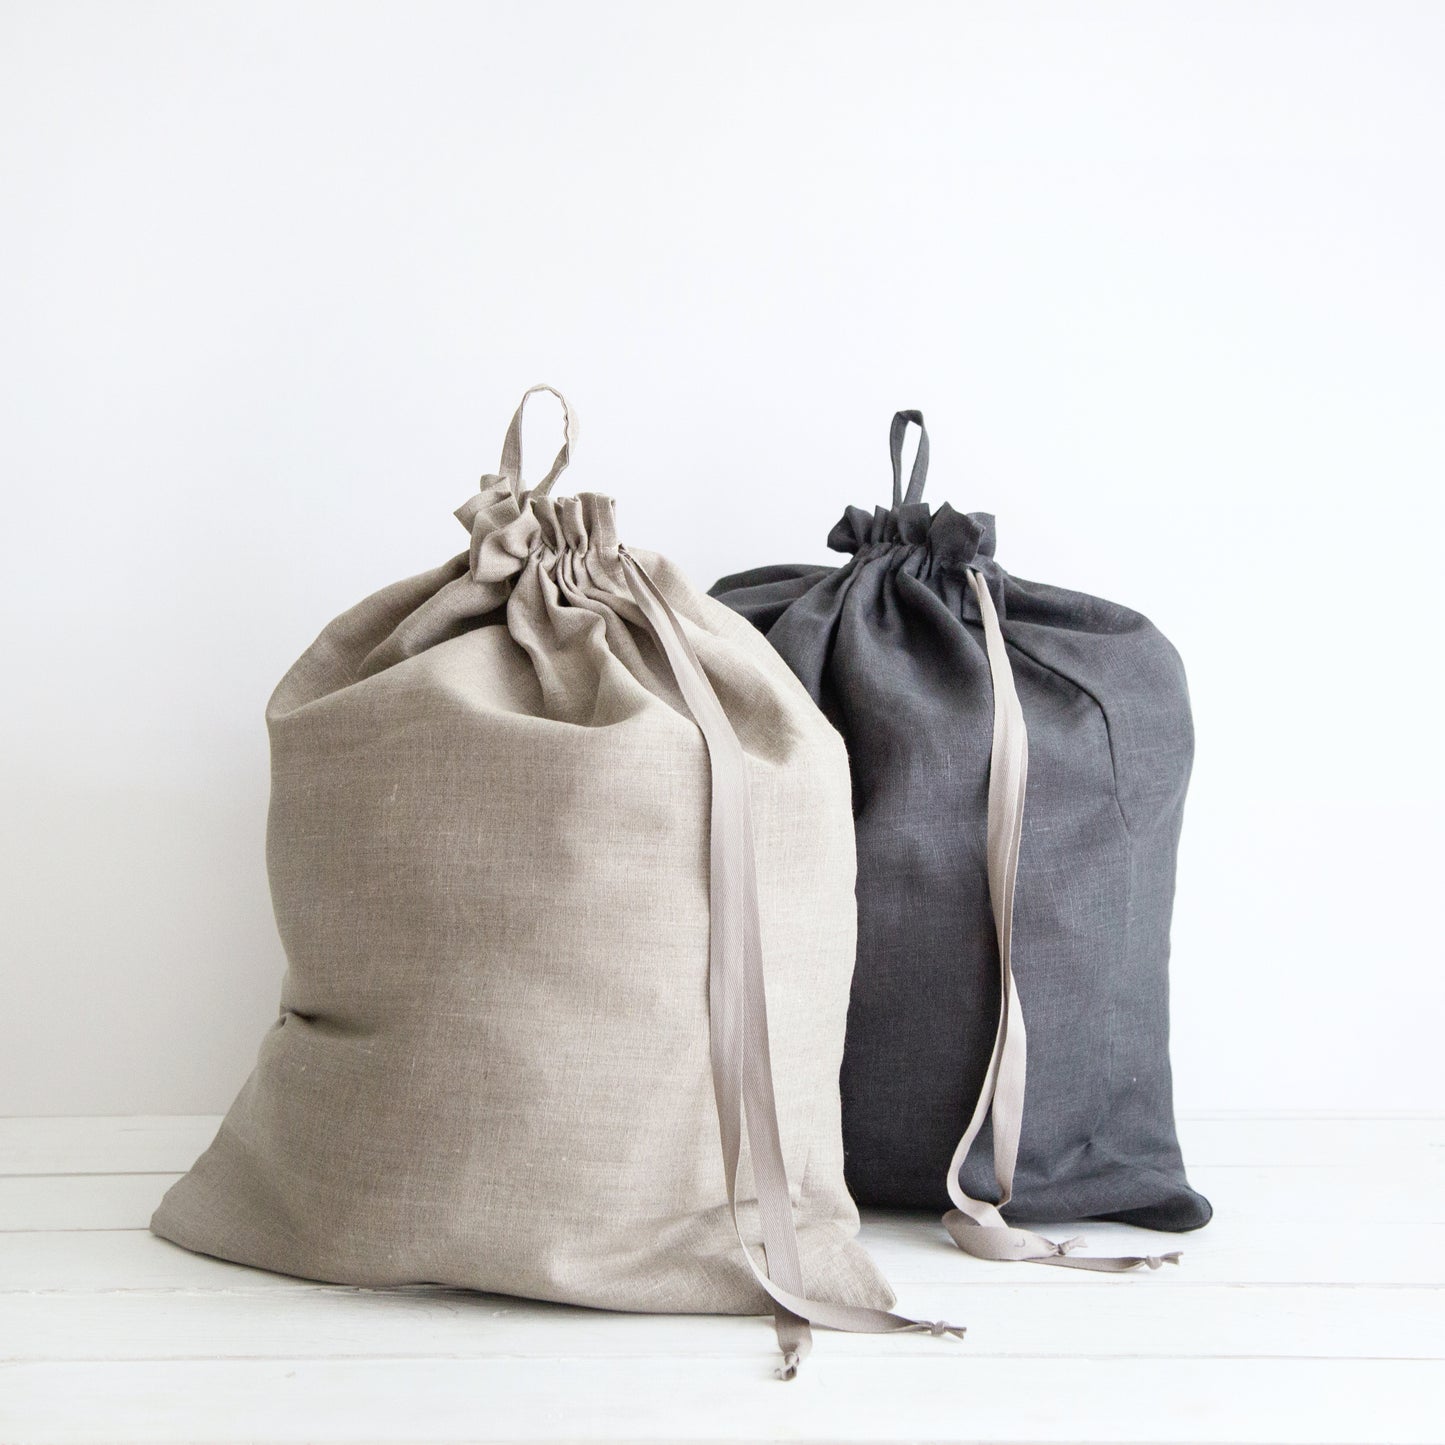 Natural Linen Laundry Bag - Large Drawstring Closure Storage Bag, Hanging Dorm laundry bag, 45x56cm